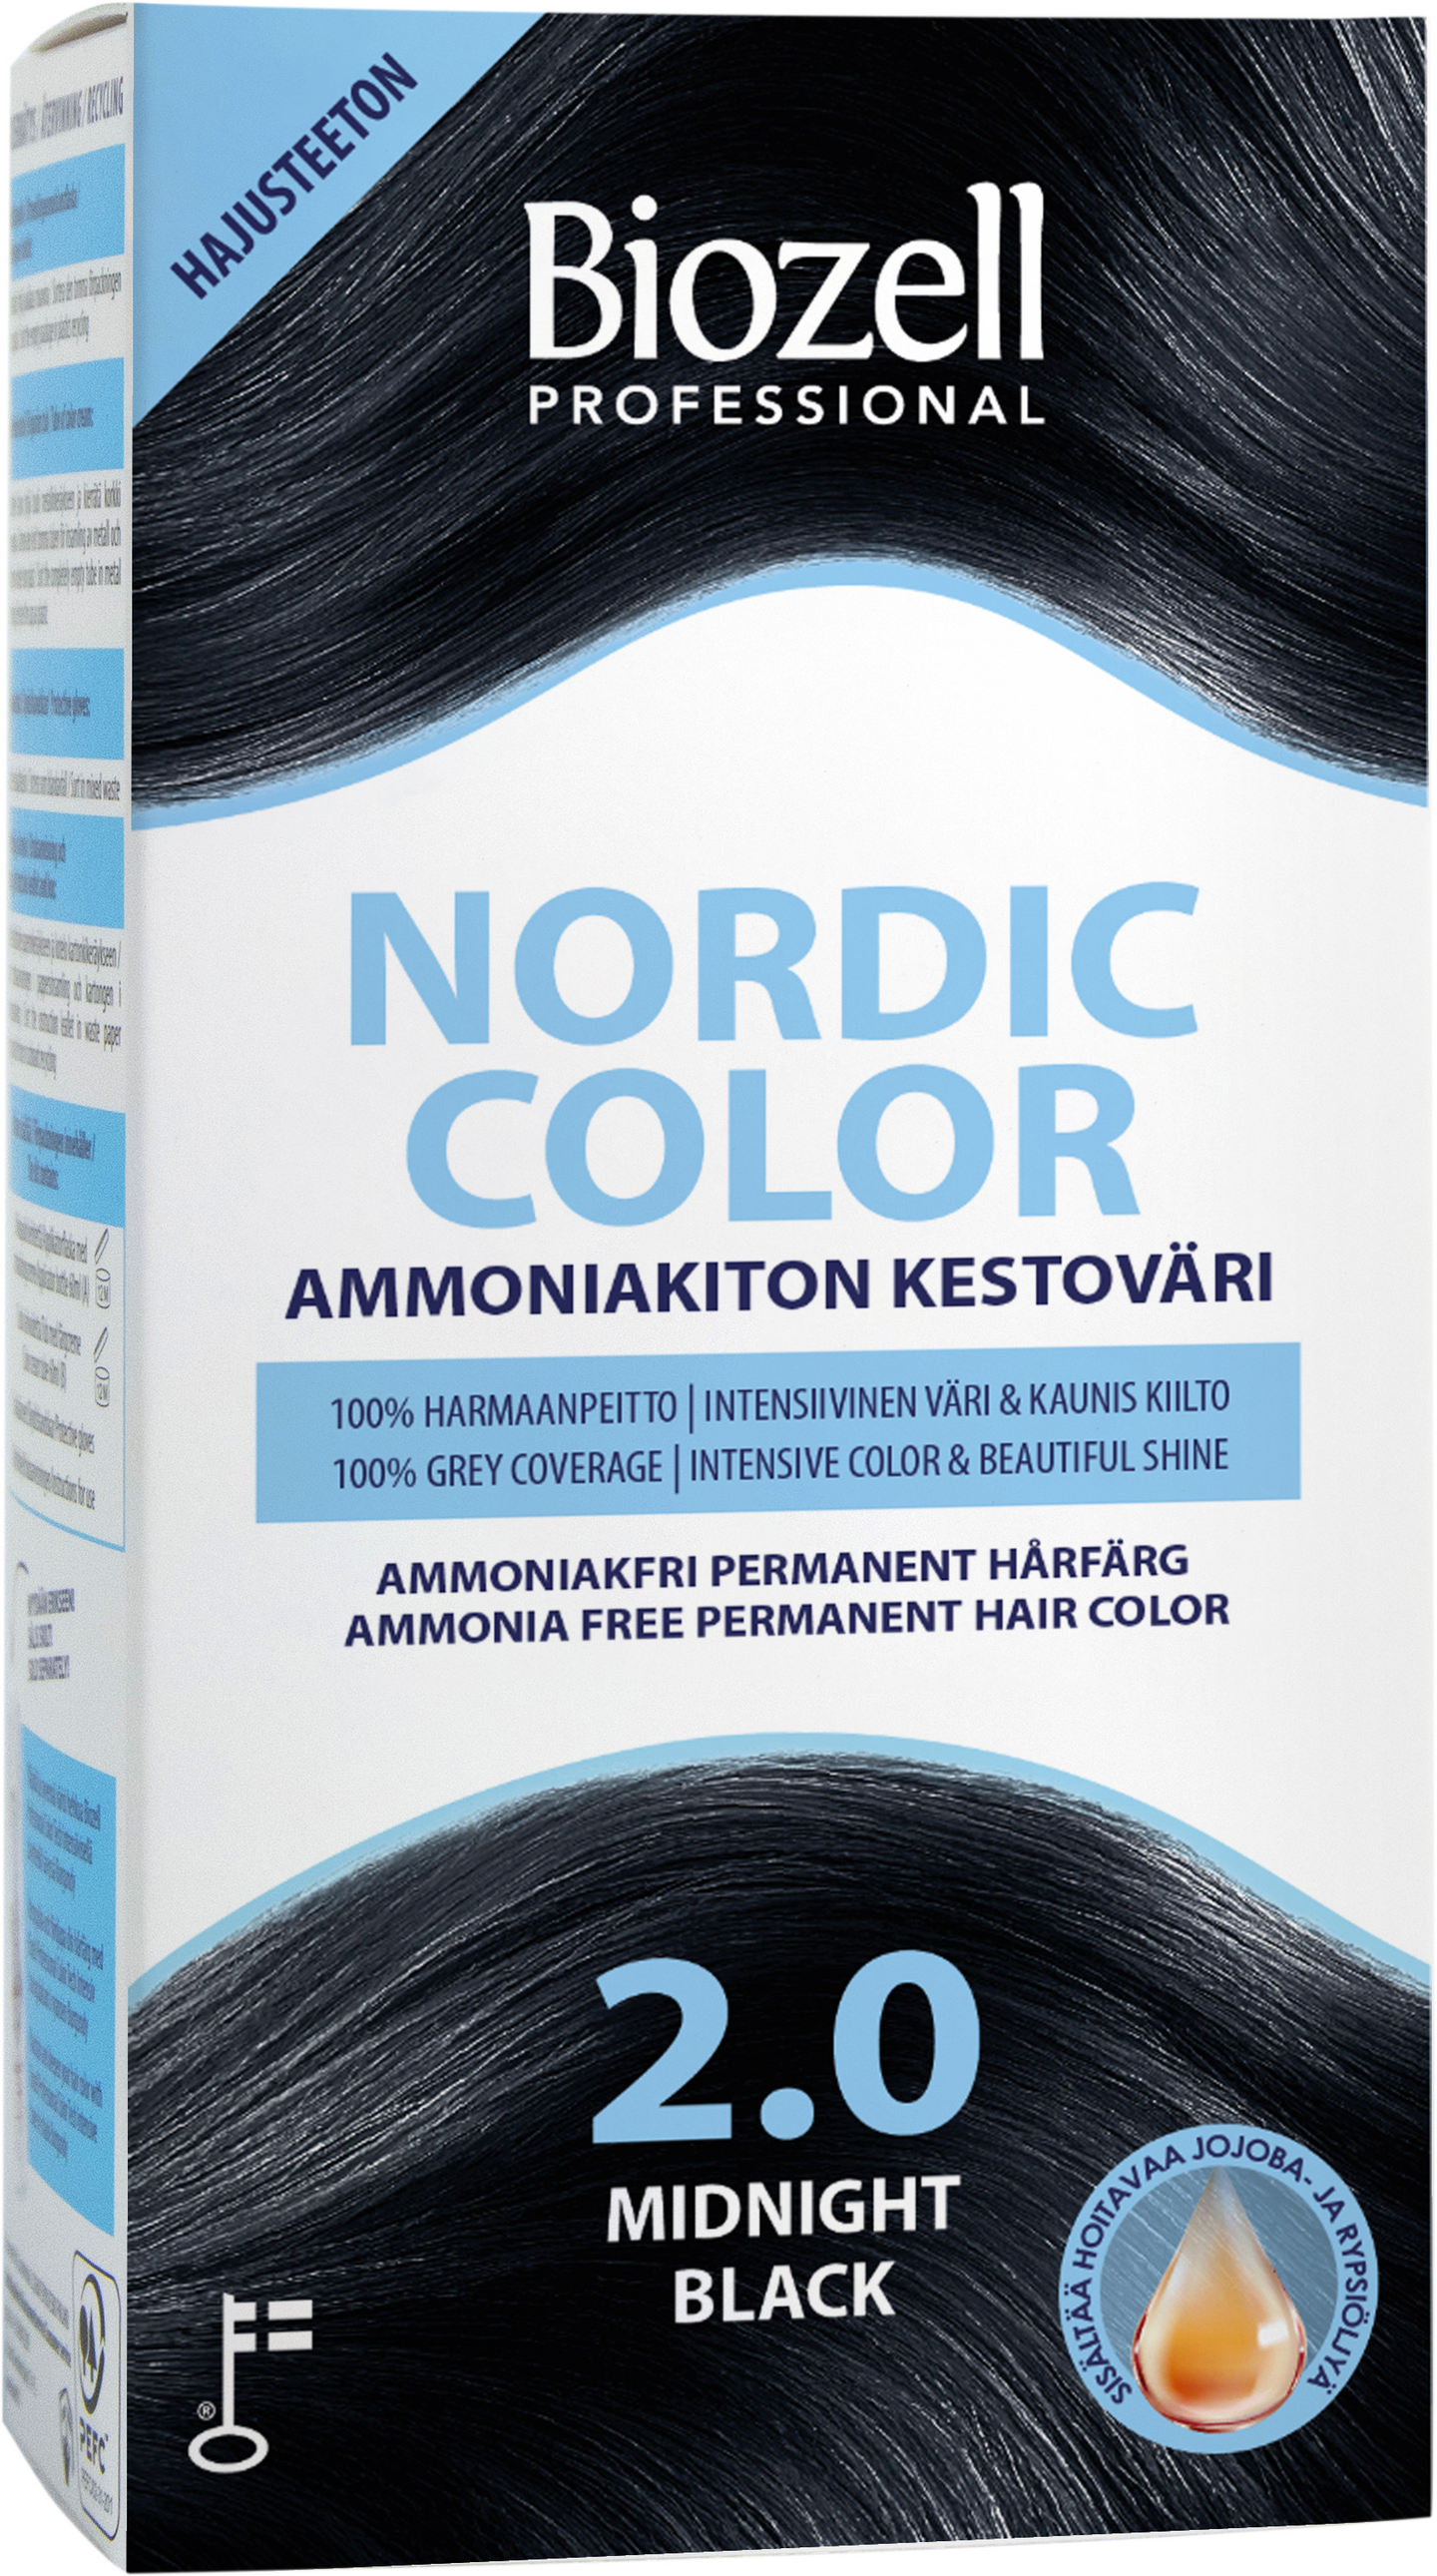 Biozell Professional Nordic Color kestoväri 2.0 2x60ml Midnight Black ammoniakiton